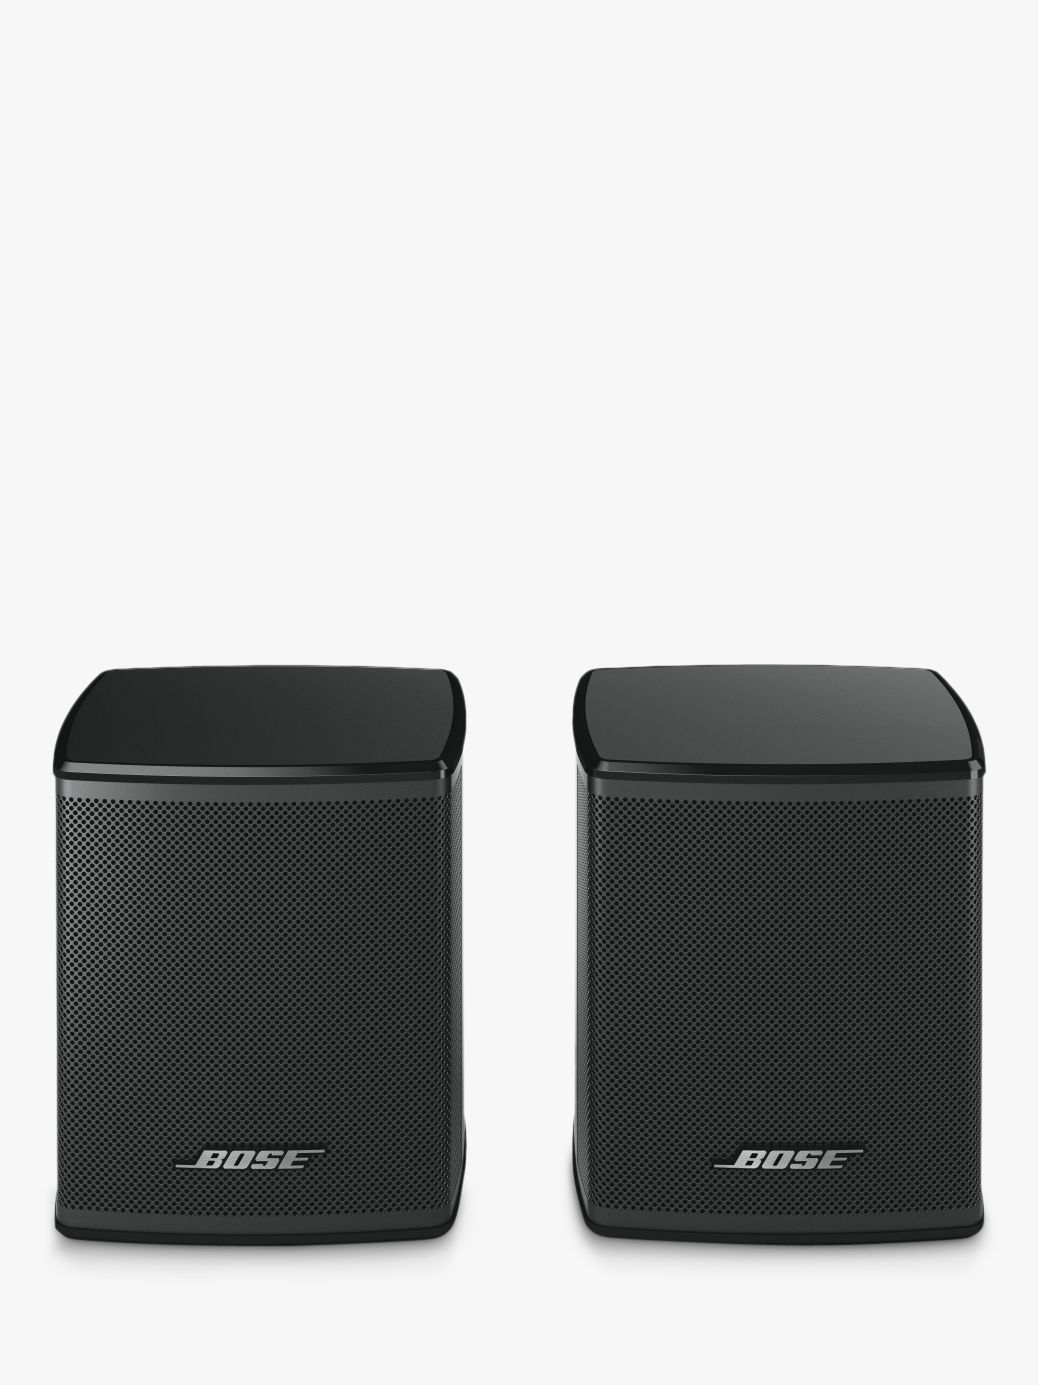 640px x 853px - Bose Surround Speakers, Black